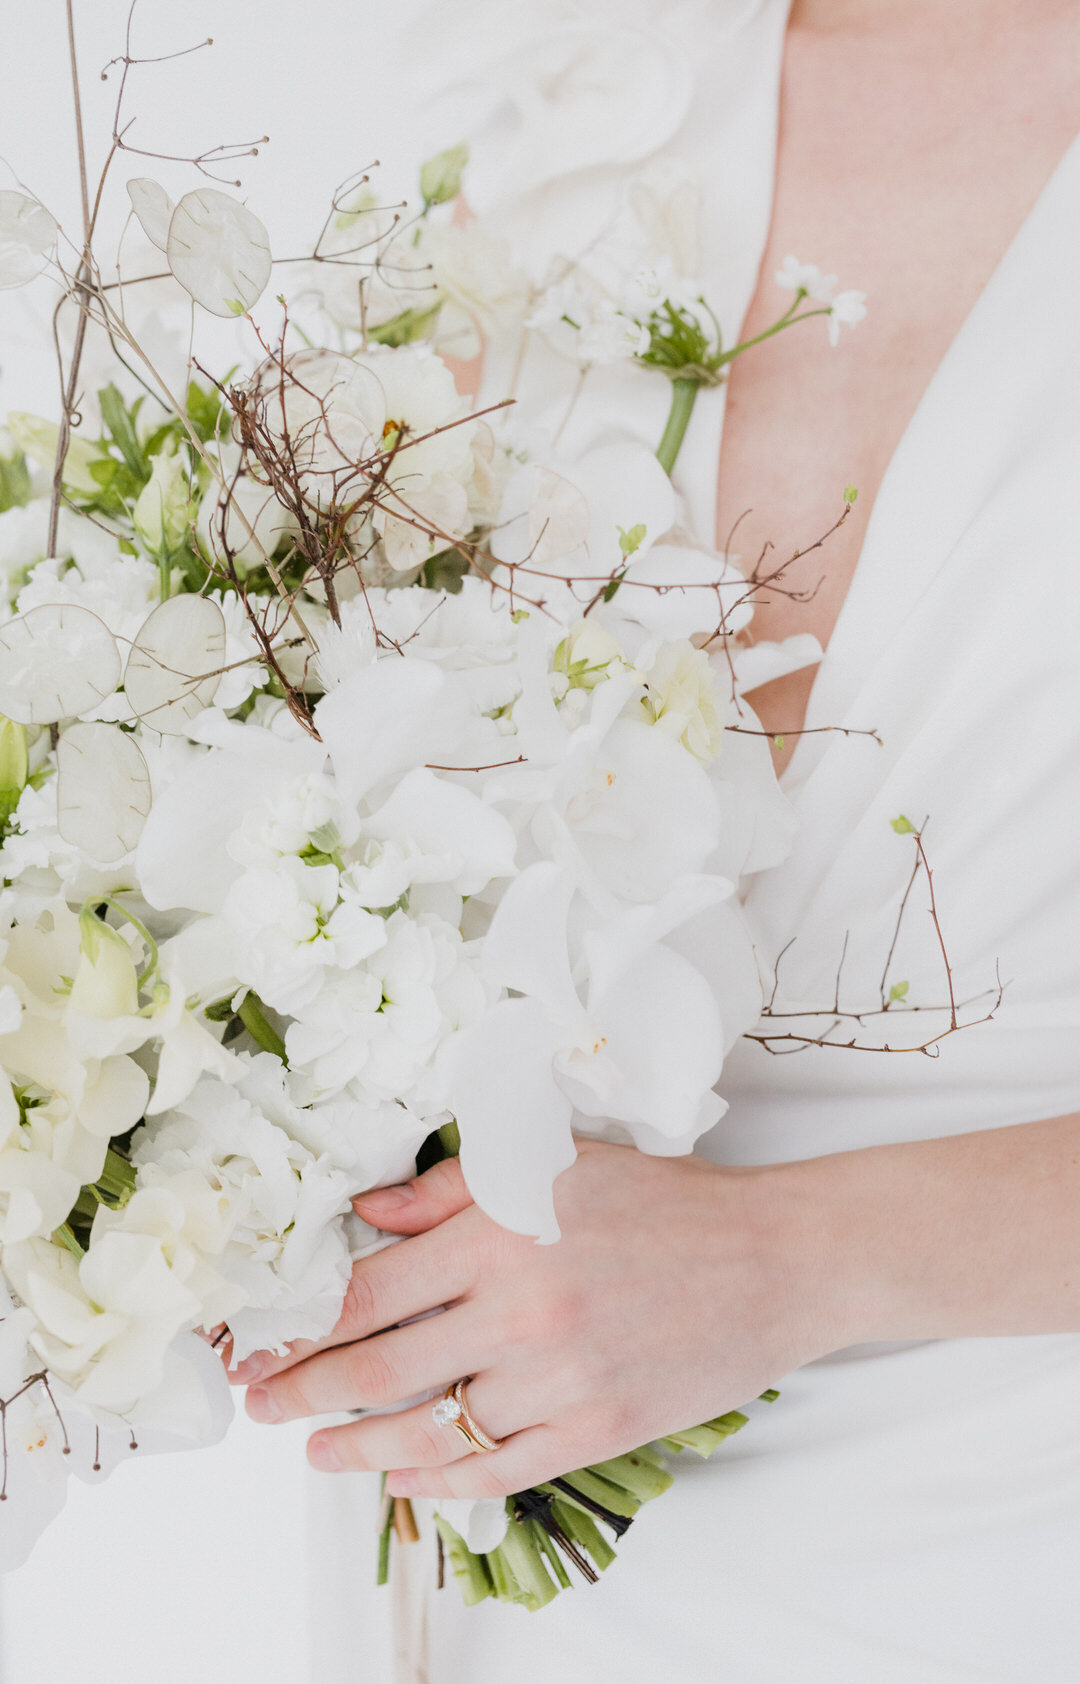 zurich-civil-wedding-photographer-elopement-mary-fernandez-leaf-and-lace